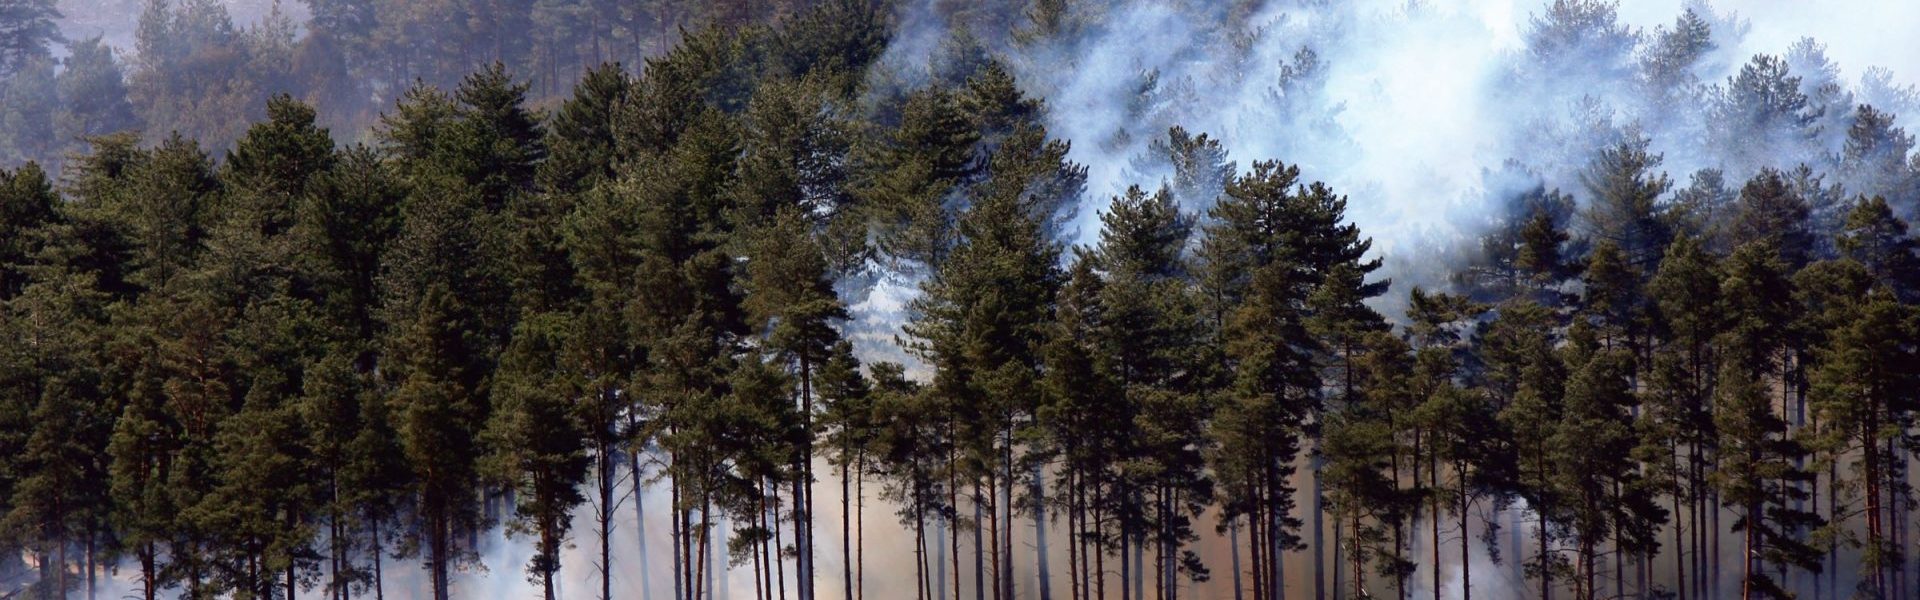 Broadmoor on alert as forest fire spreads.